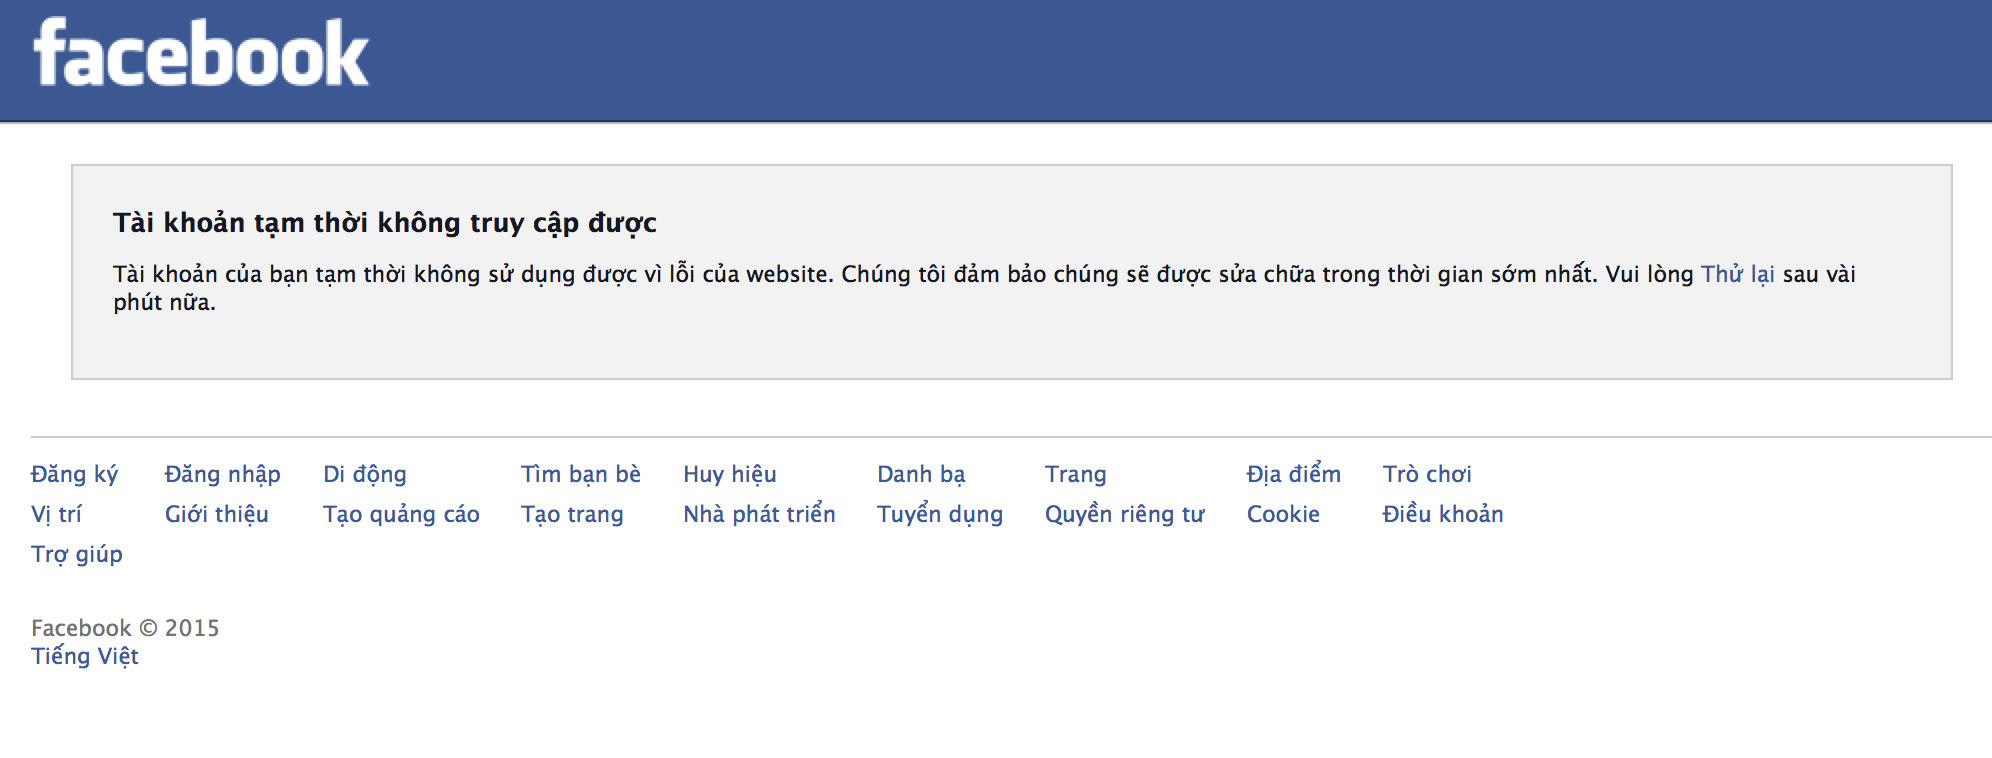 khong-vao-duoc-facebook-1